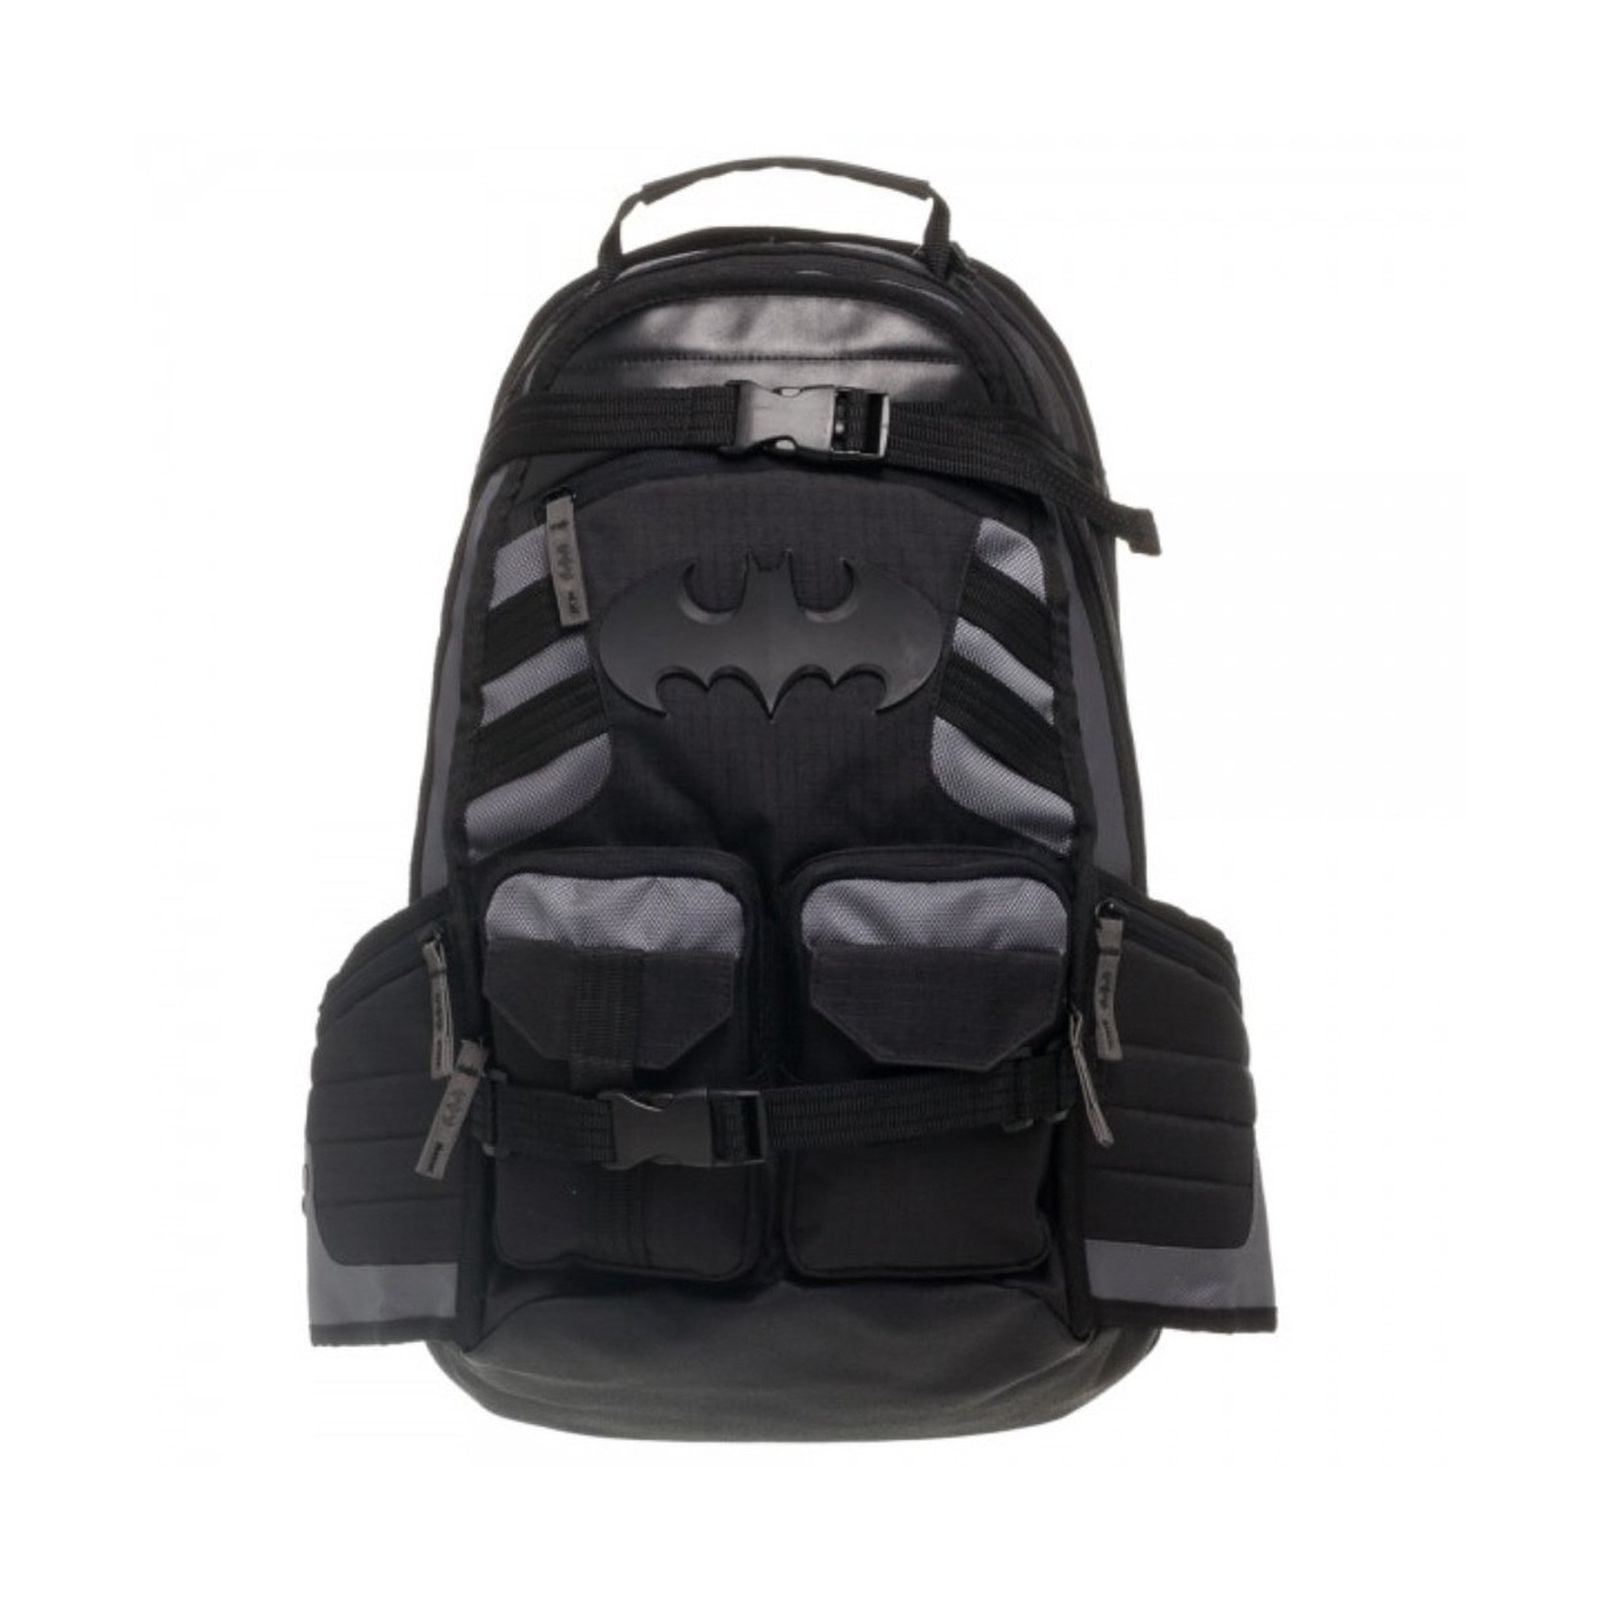 Funko Batman Mini Backpack Black/Faux Leather Target Exclusive | eBay